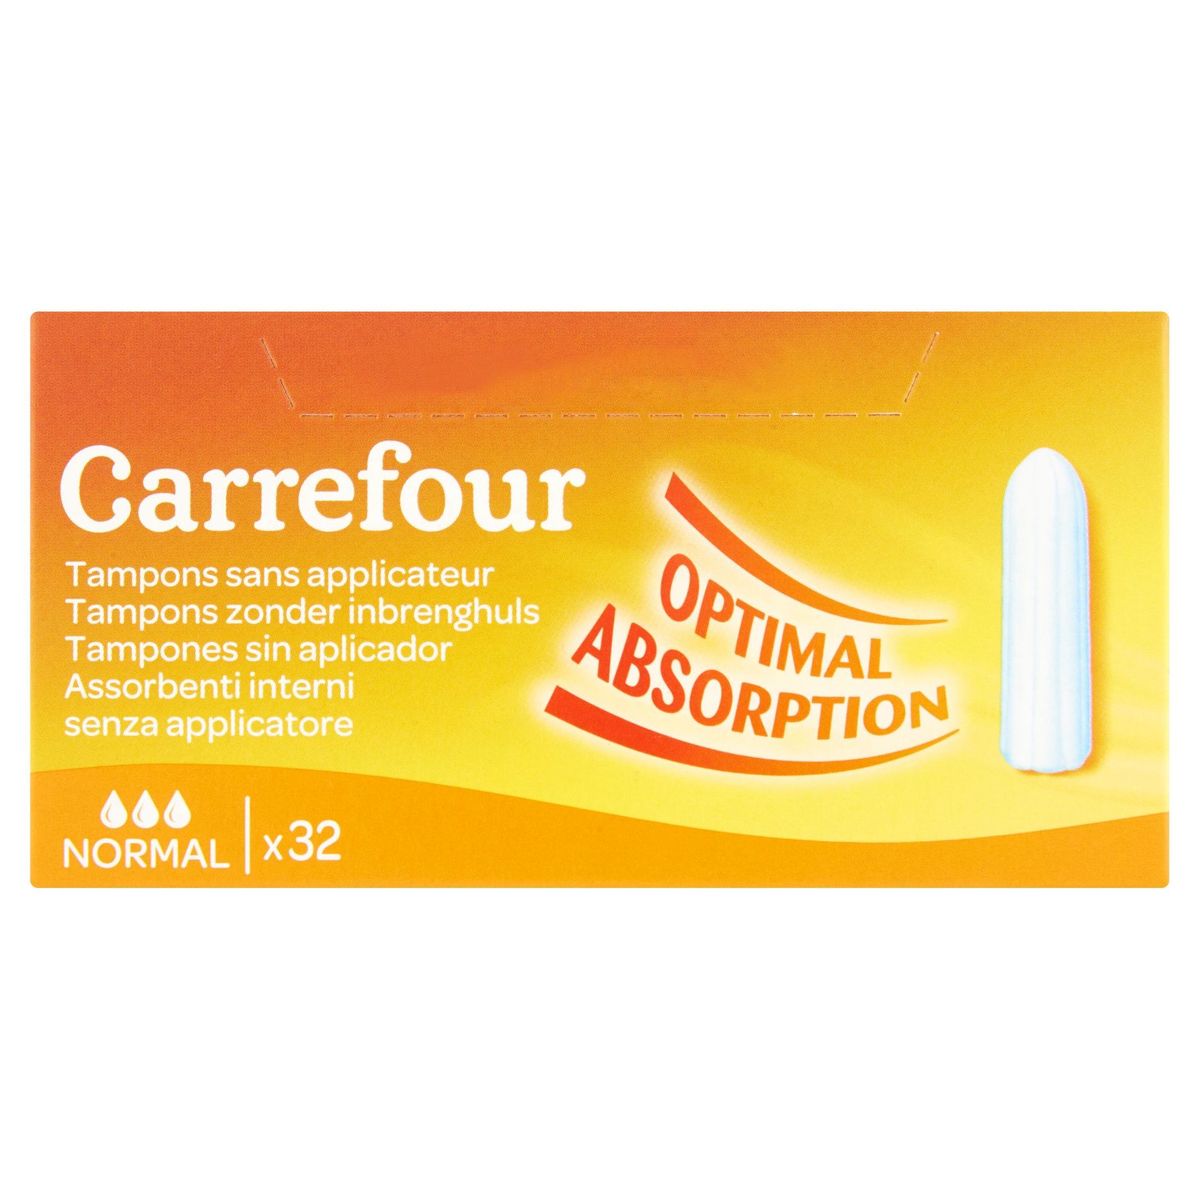 Carrefour Tampons zonder Inbrenghuls Normal x 32